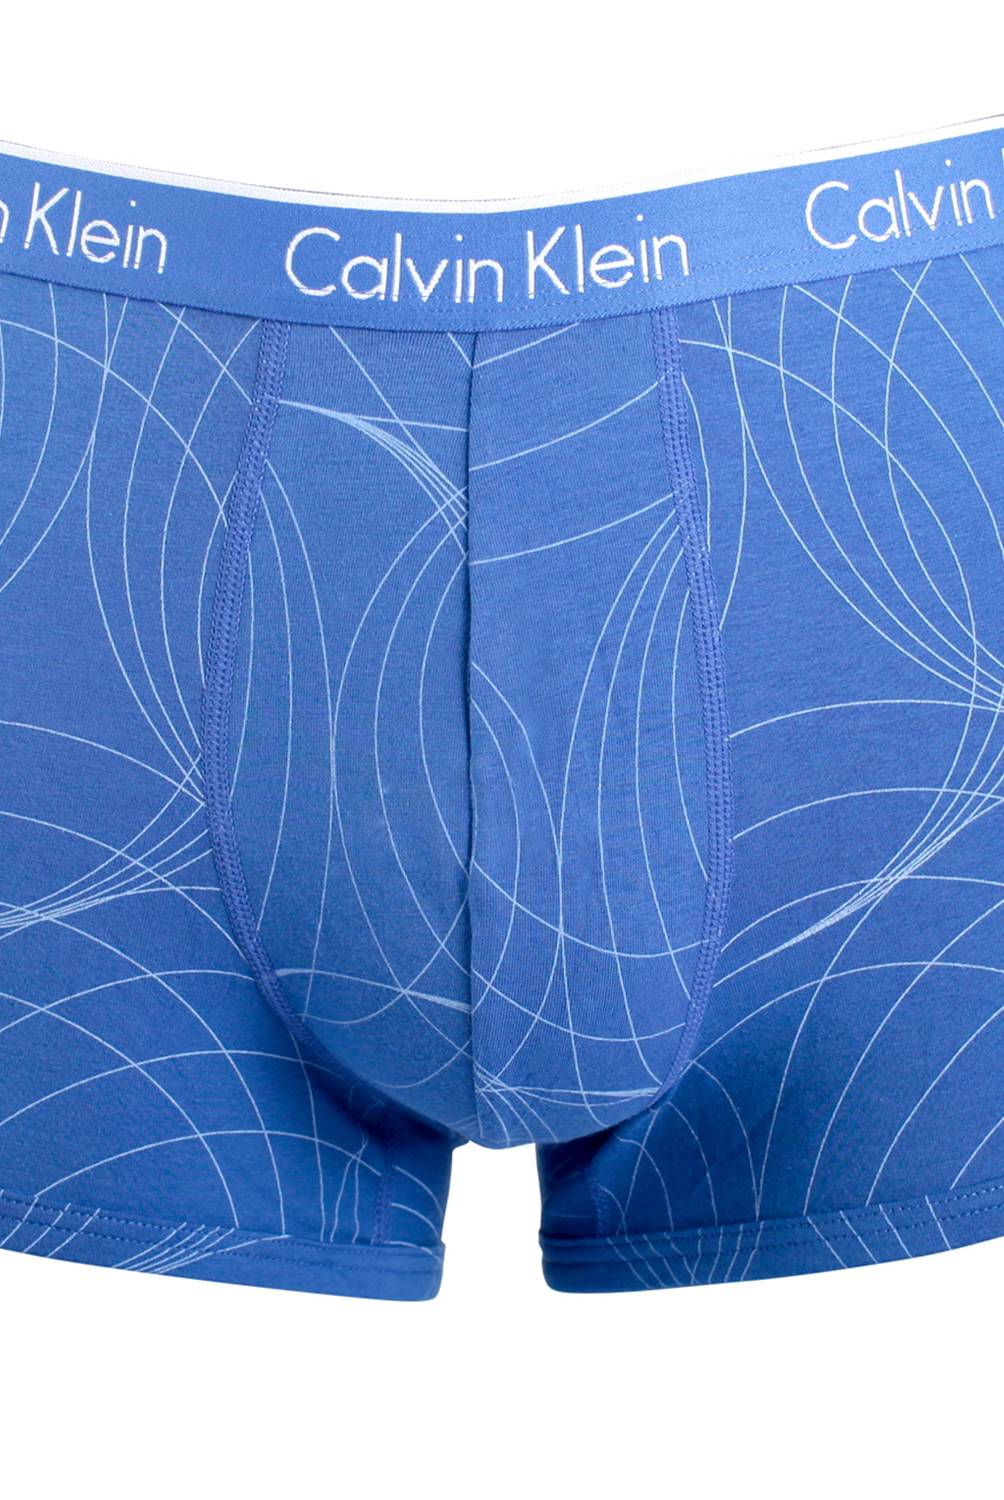 CALVIN KLEIN - Calvin Klein Slip